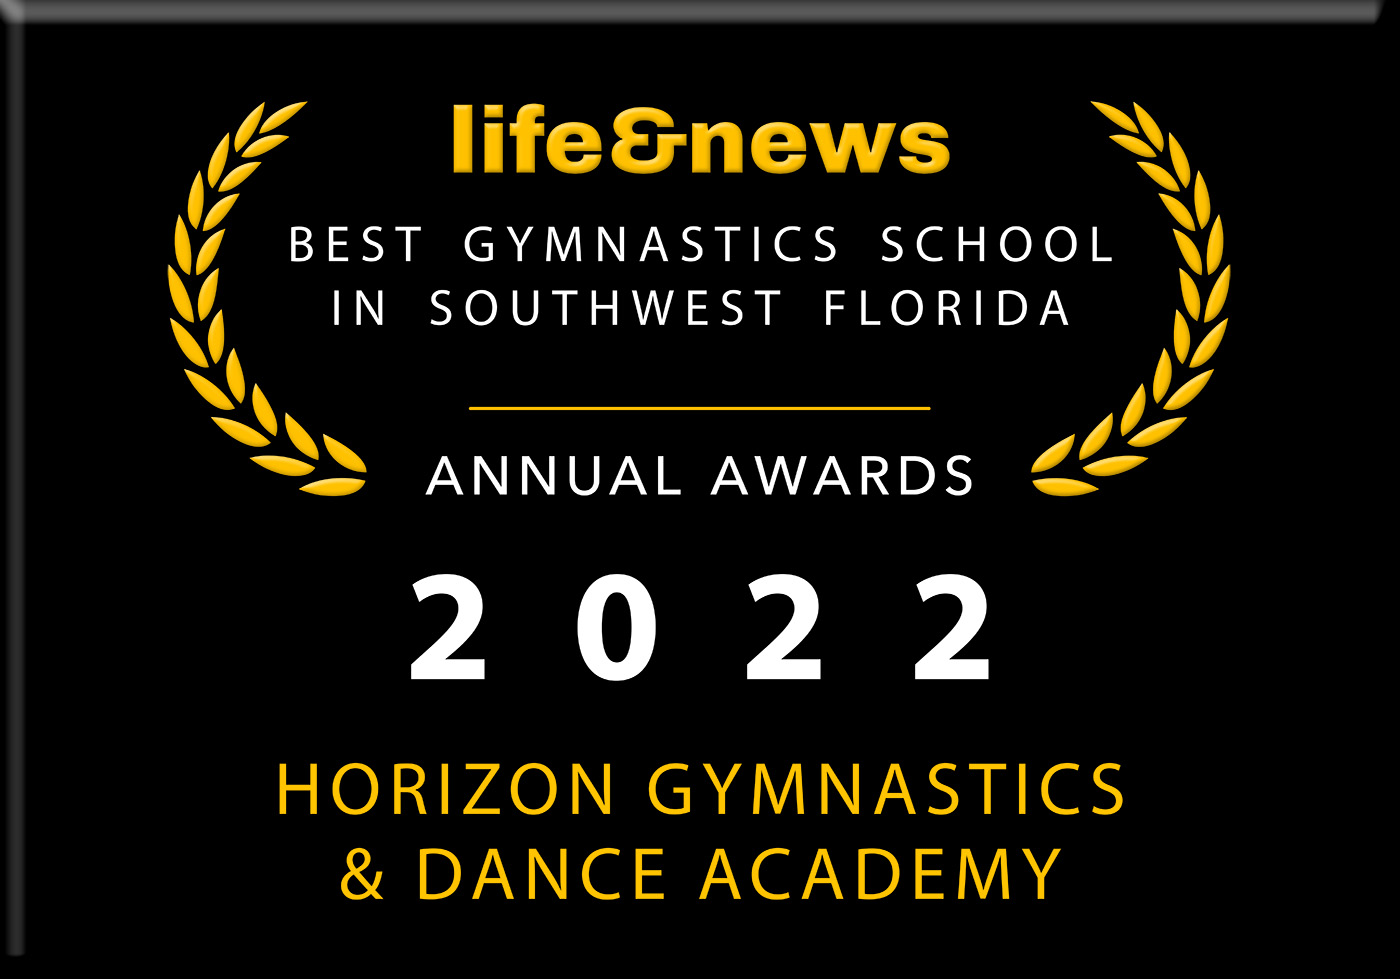 Best Gymnastics School in Southwest Florida, Horizon Gymnastics & Dance Academy